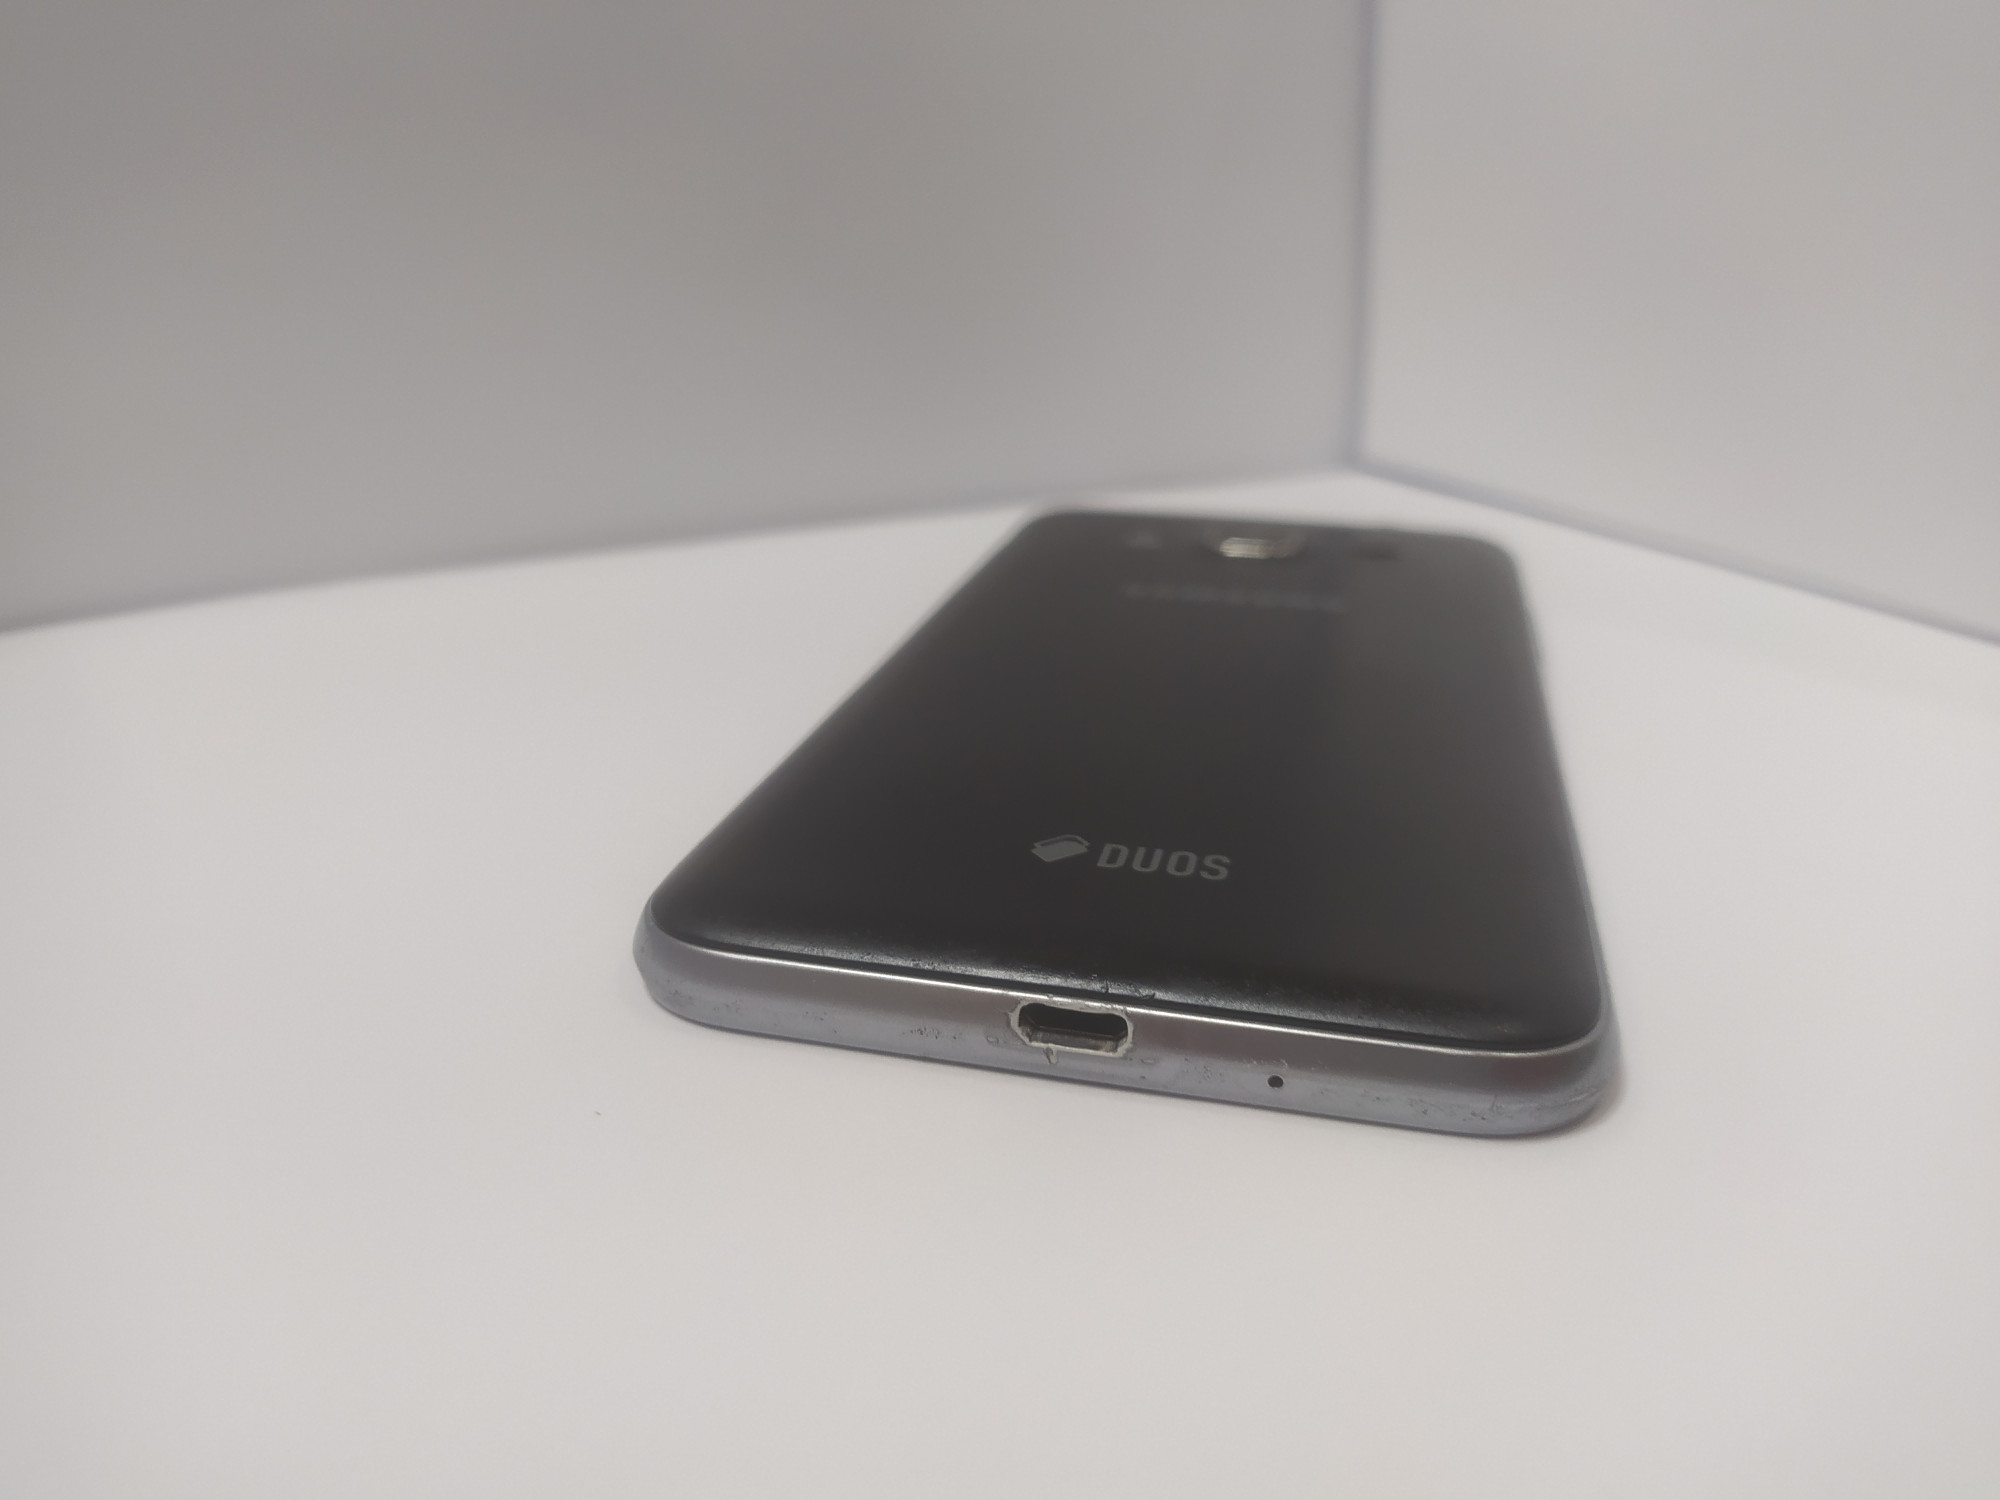 Samsung Galaxy J3 2016 Black (SM-J320HZKD) 1/8Gb 5